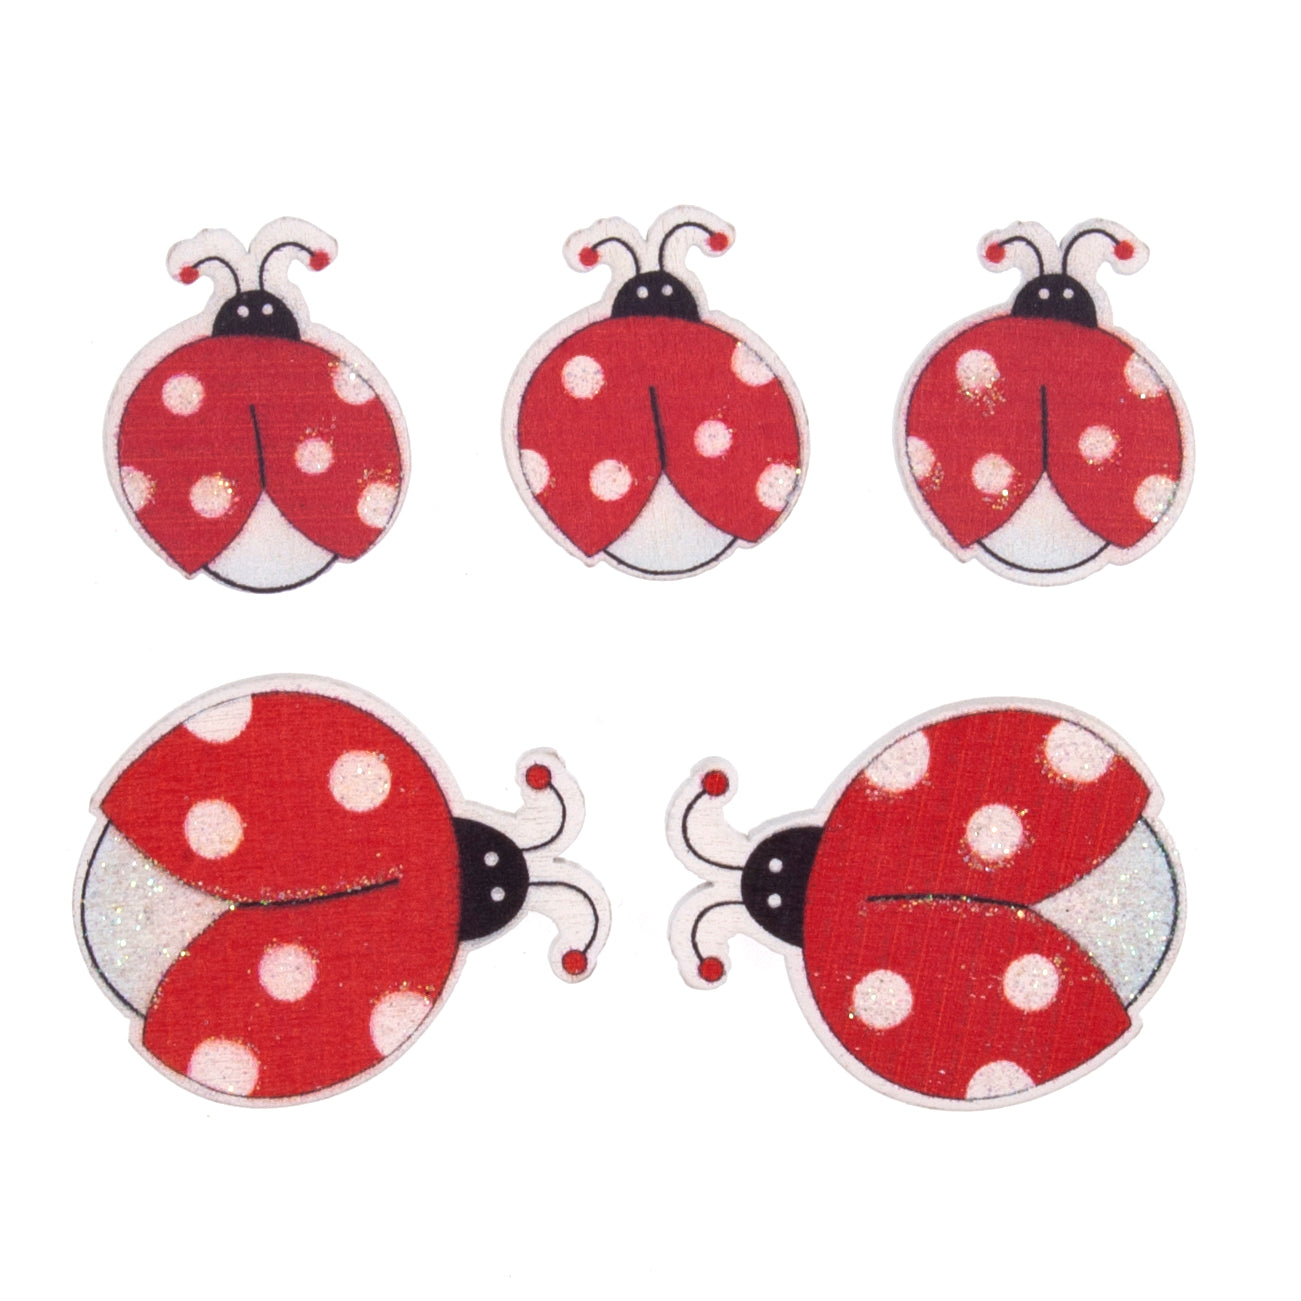 Craft Embellishments: Ladybirds with Glitter - 5pk